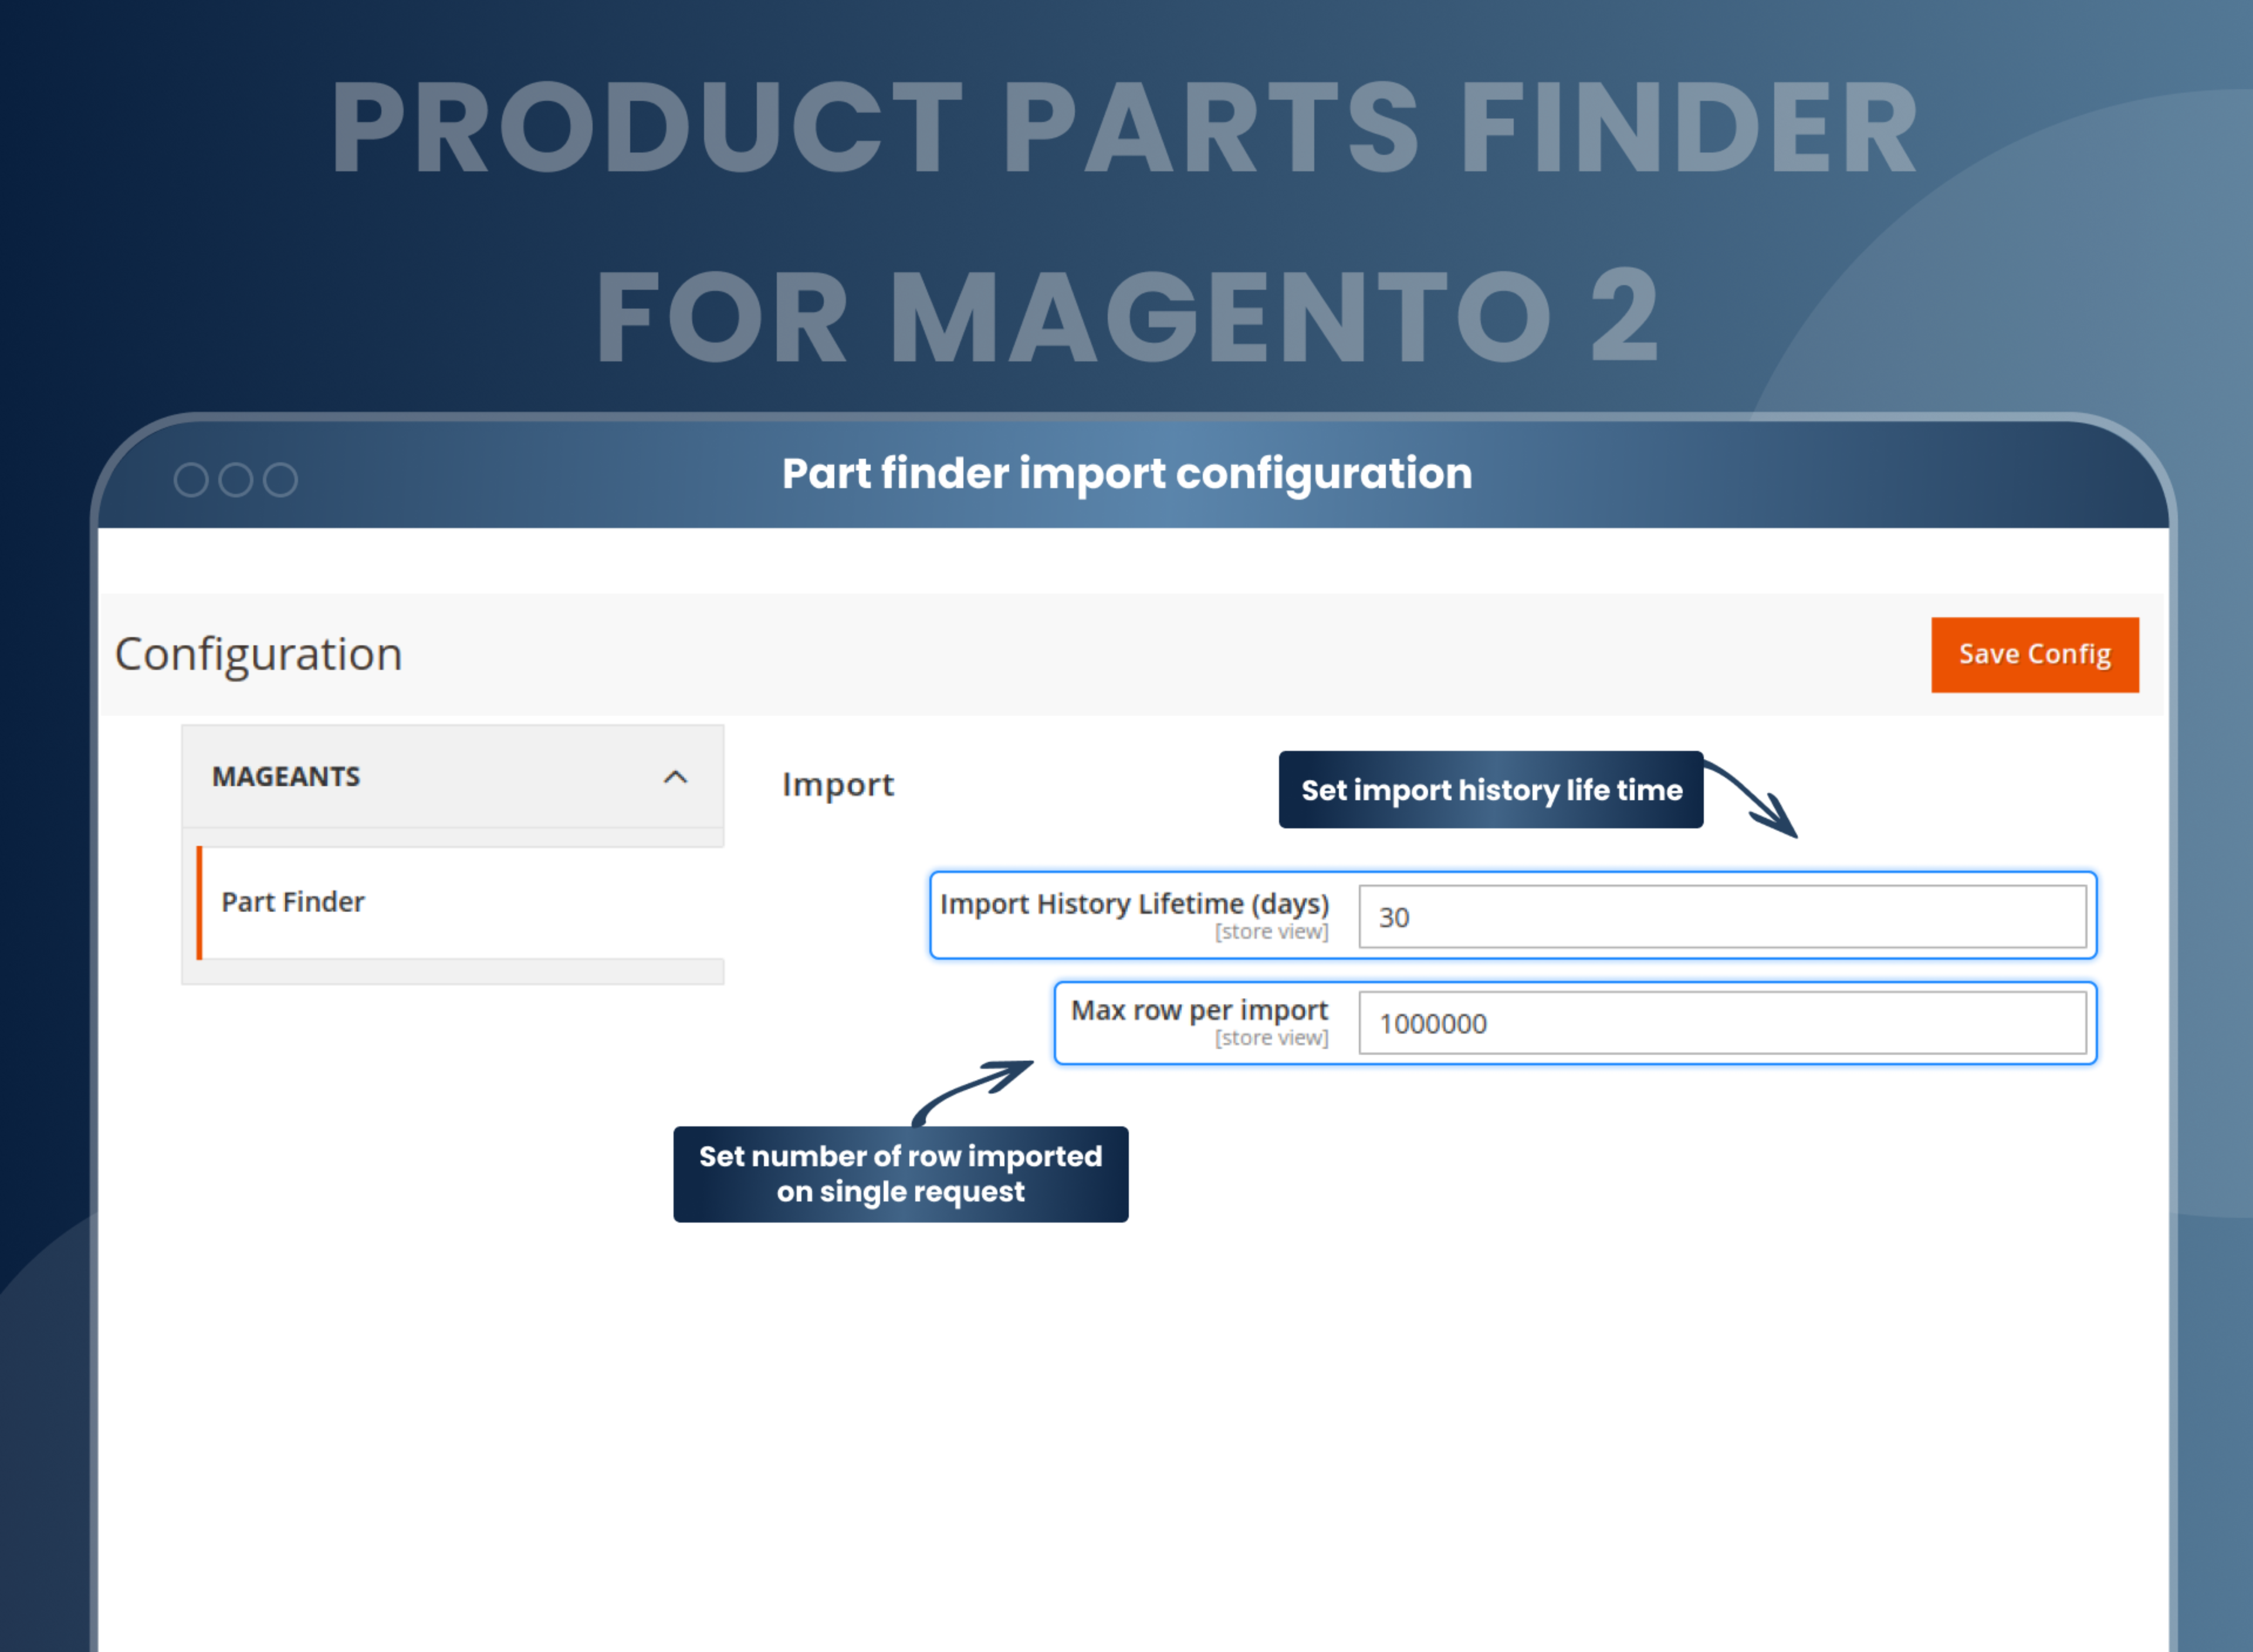 Part finder import configuration